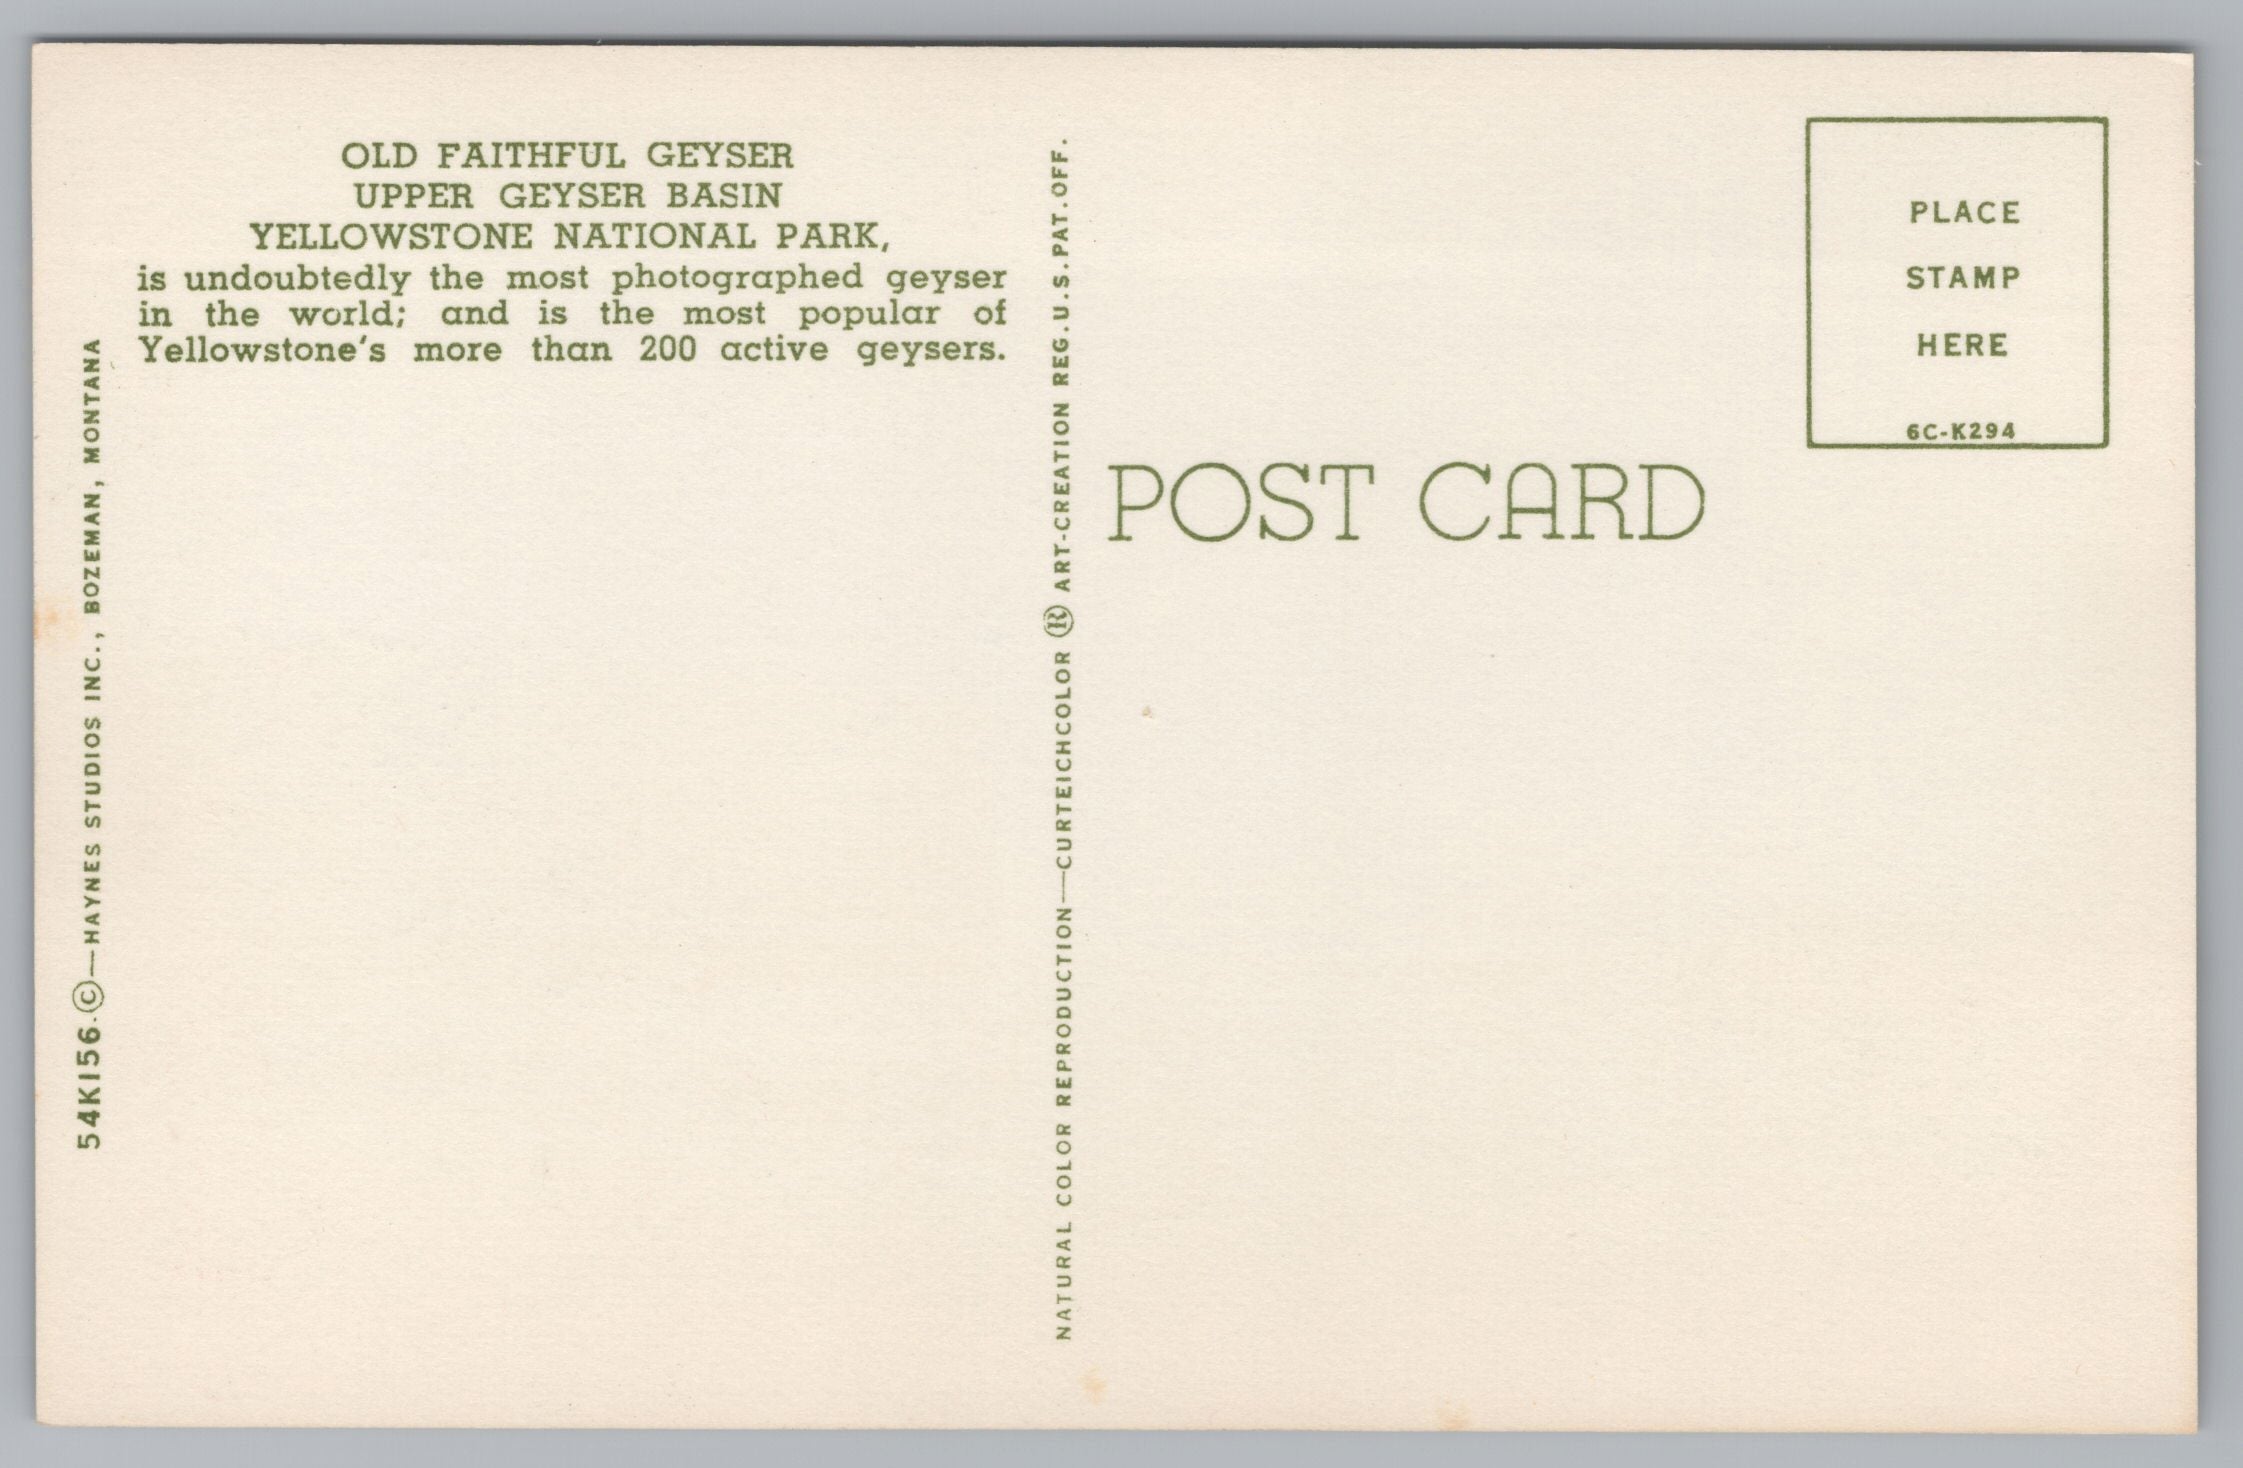 Old Faithful Geyser, Upper Geyser Basin, Yellowstone, Vintage Post Card.